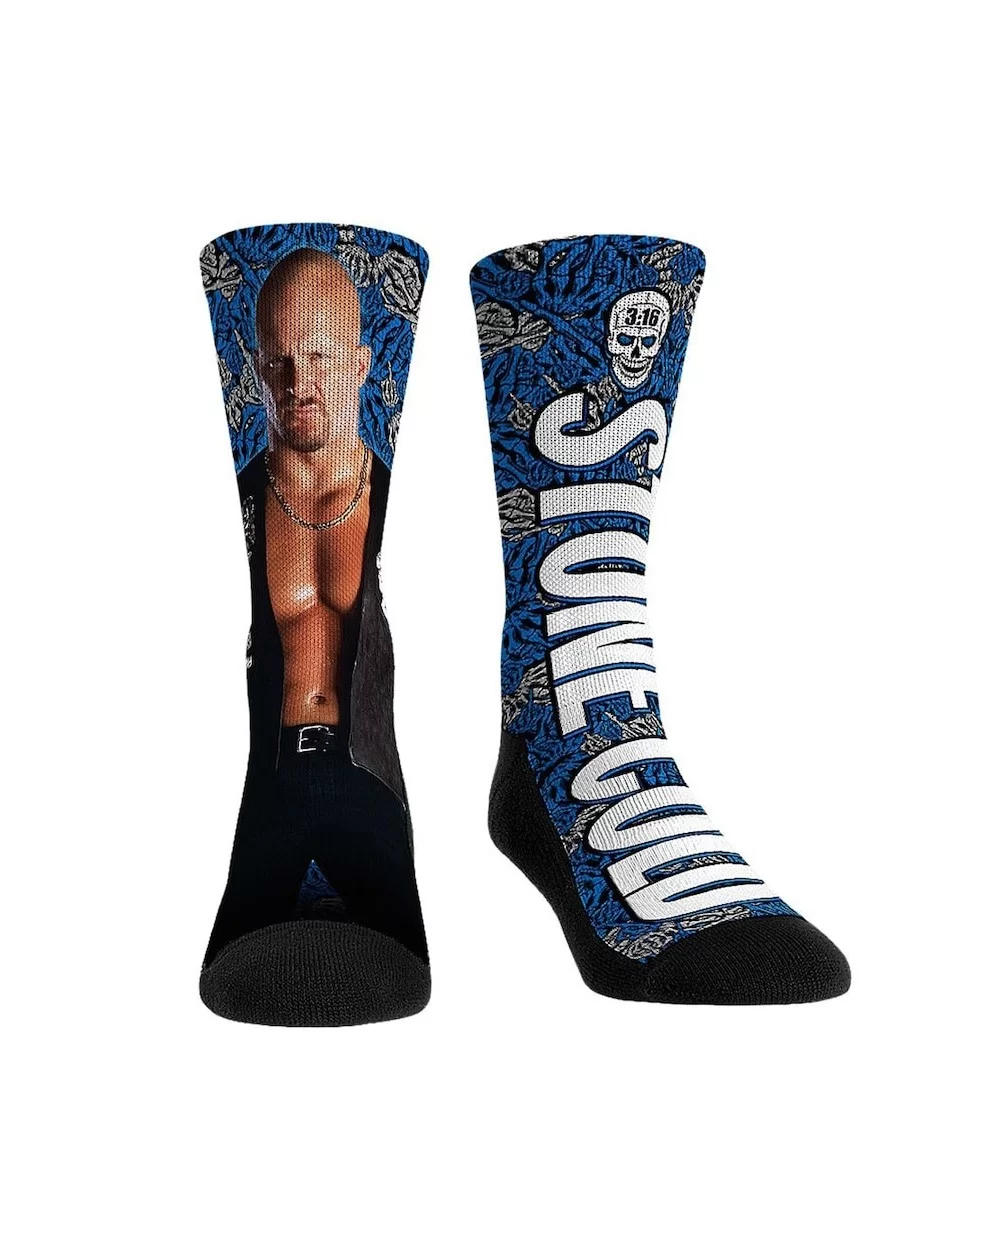 Unisex Rock Em Socks "Stone Cold" Steve Austin Big Wrestler Crew Socks $5.52 Apparel